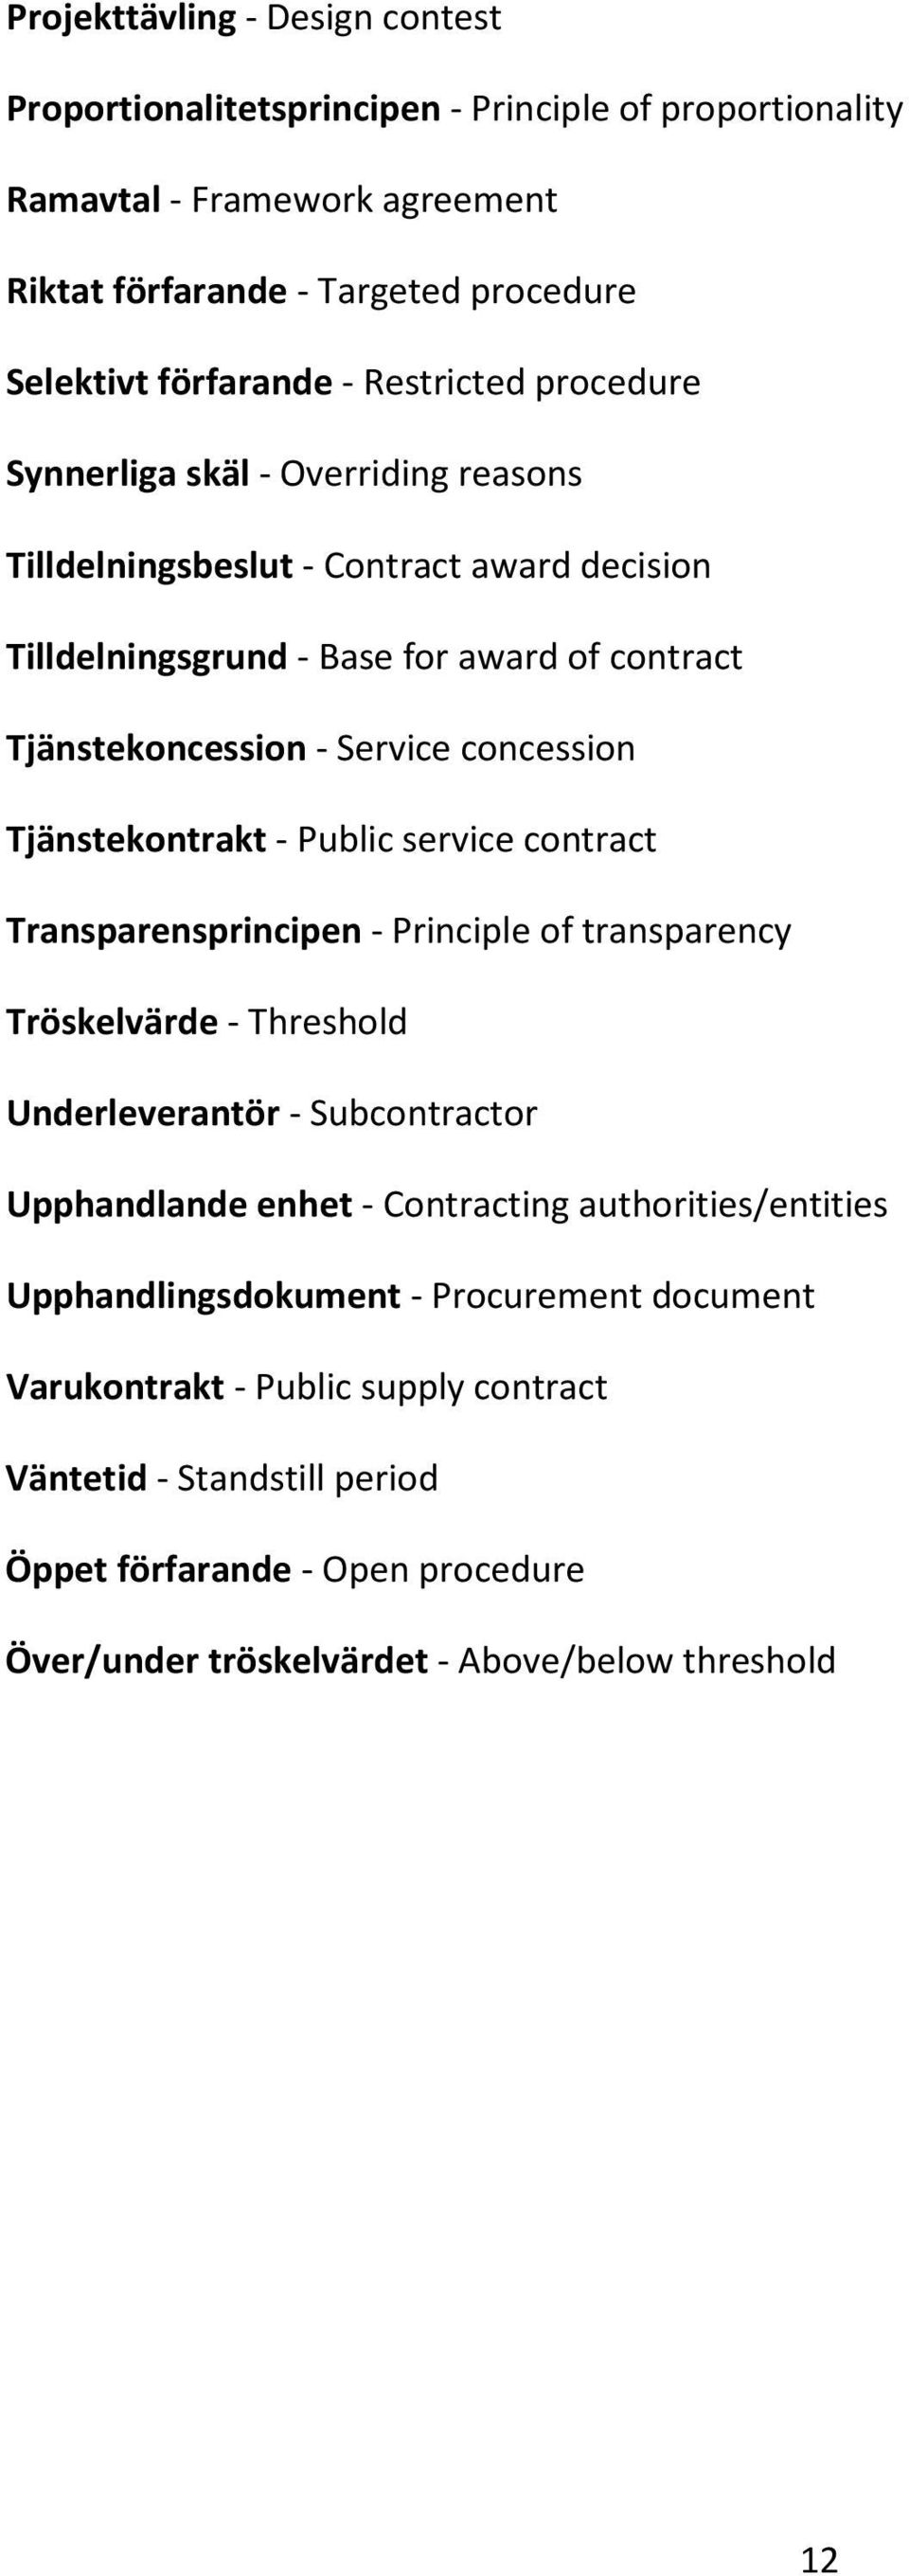 Tjänstekontrakt - Public service contract Transparensprincipen - Principle of transparency Tröskelvärde - Threshold Underleverantör - Subcontractor Upphandlande enhet - Contracting